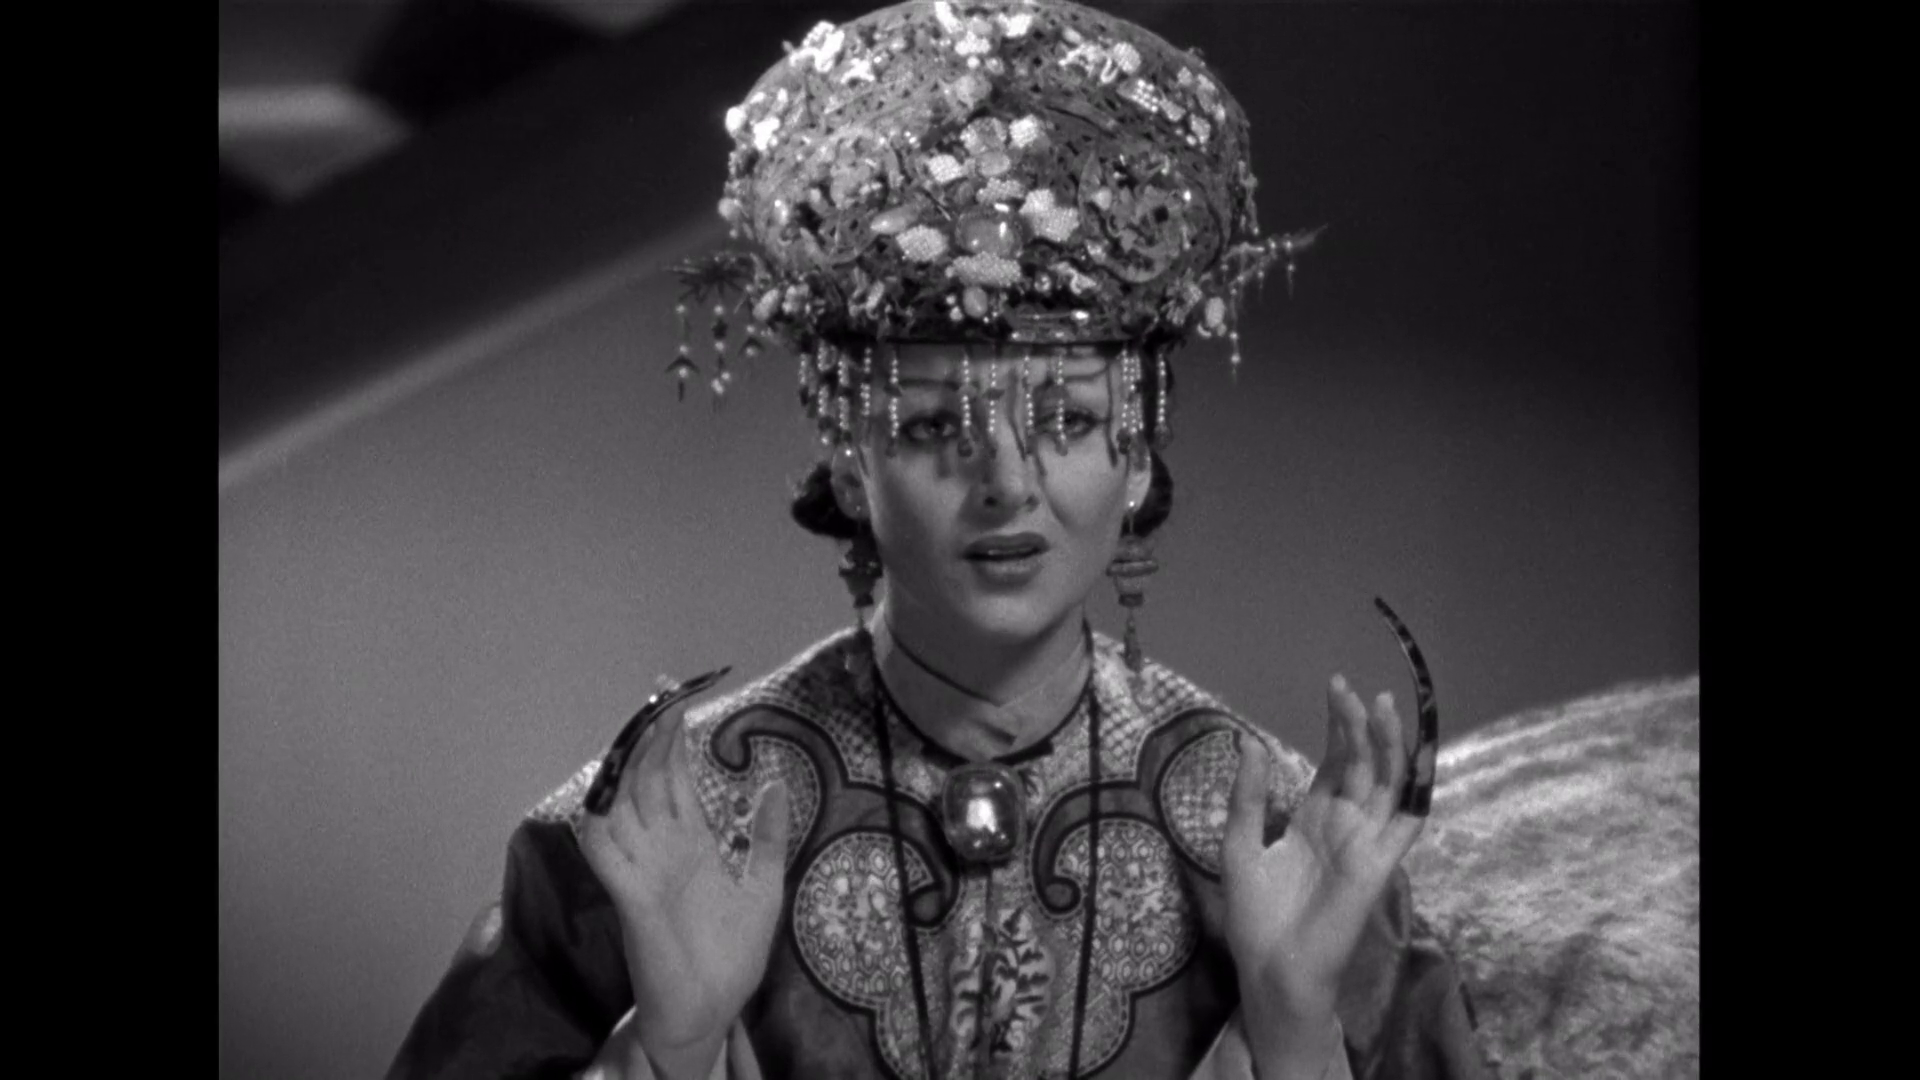 Myrna Loy dans le film The mask of Fu Manchu (Le masque d'or, 1932) de Charles Brabin